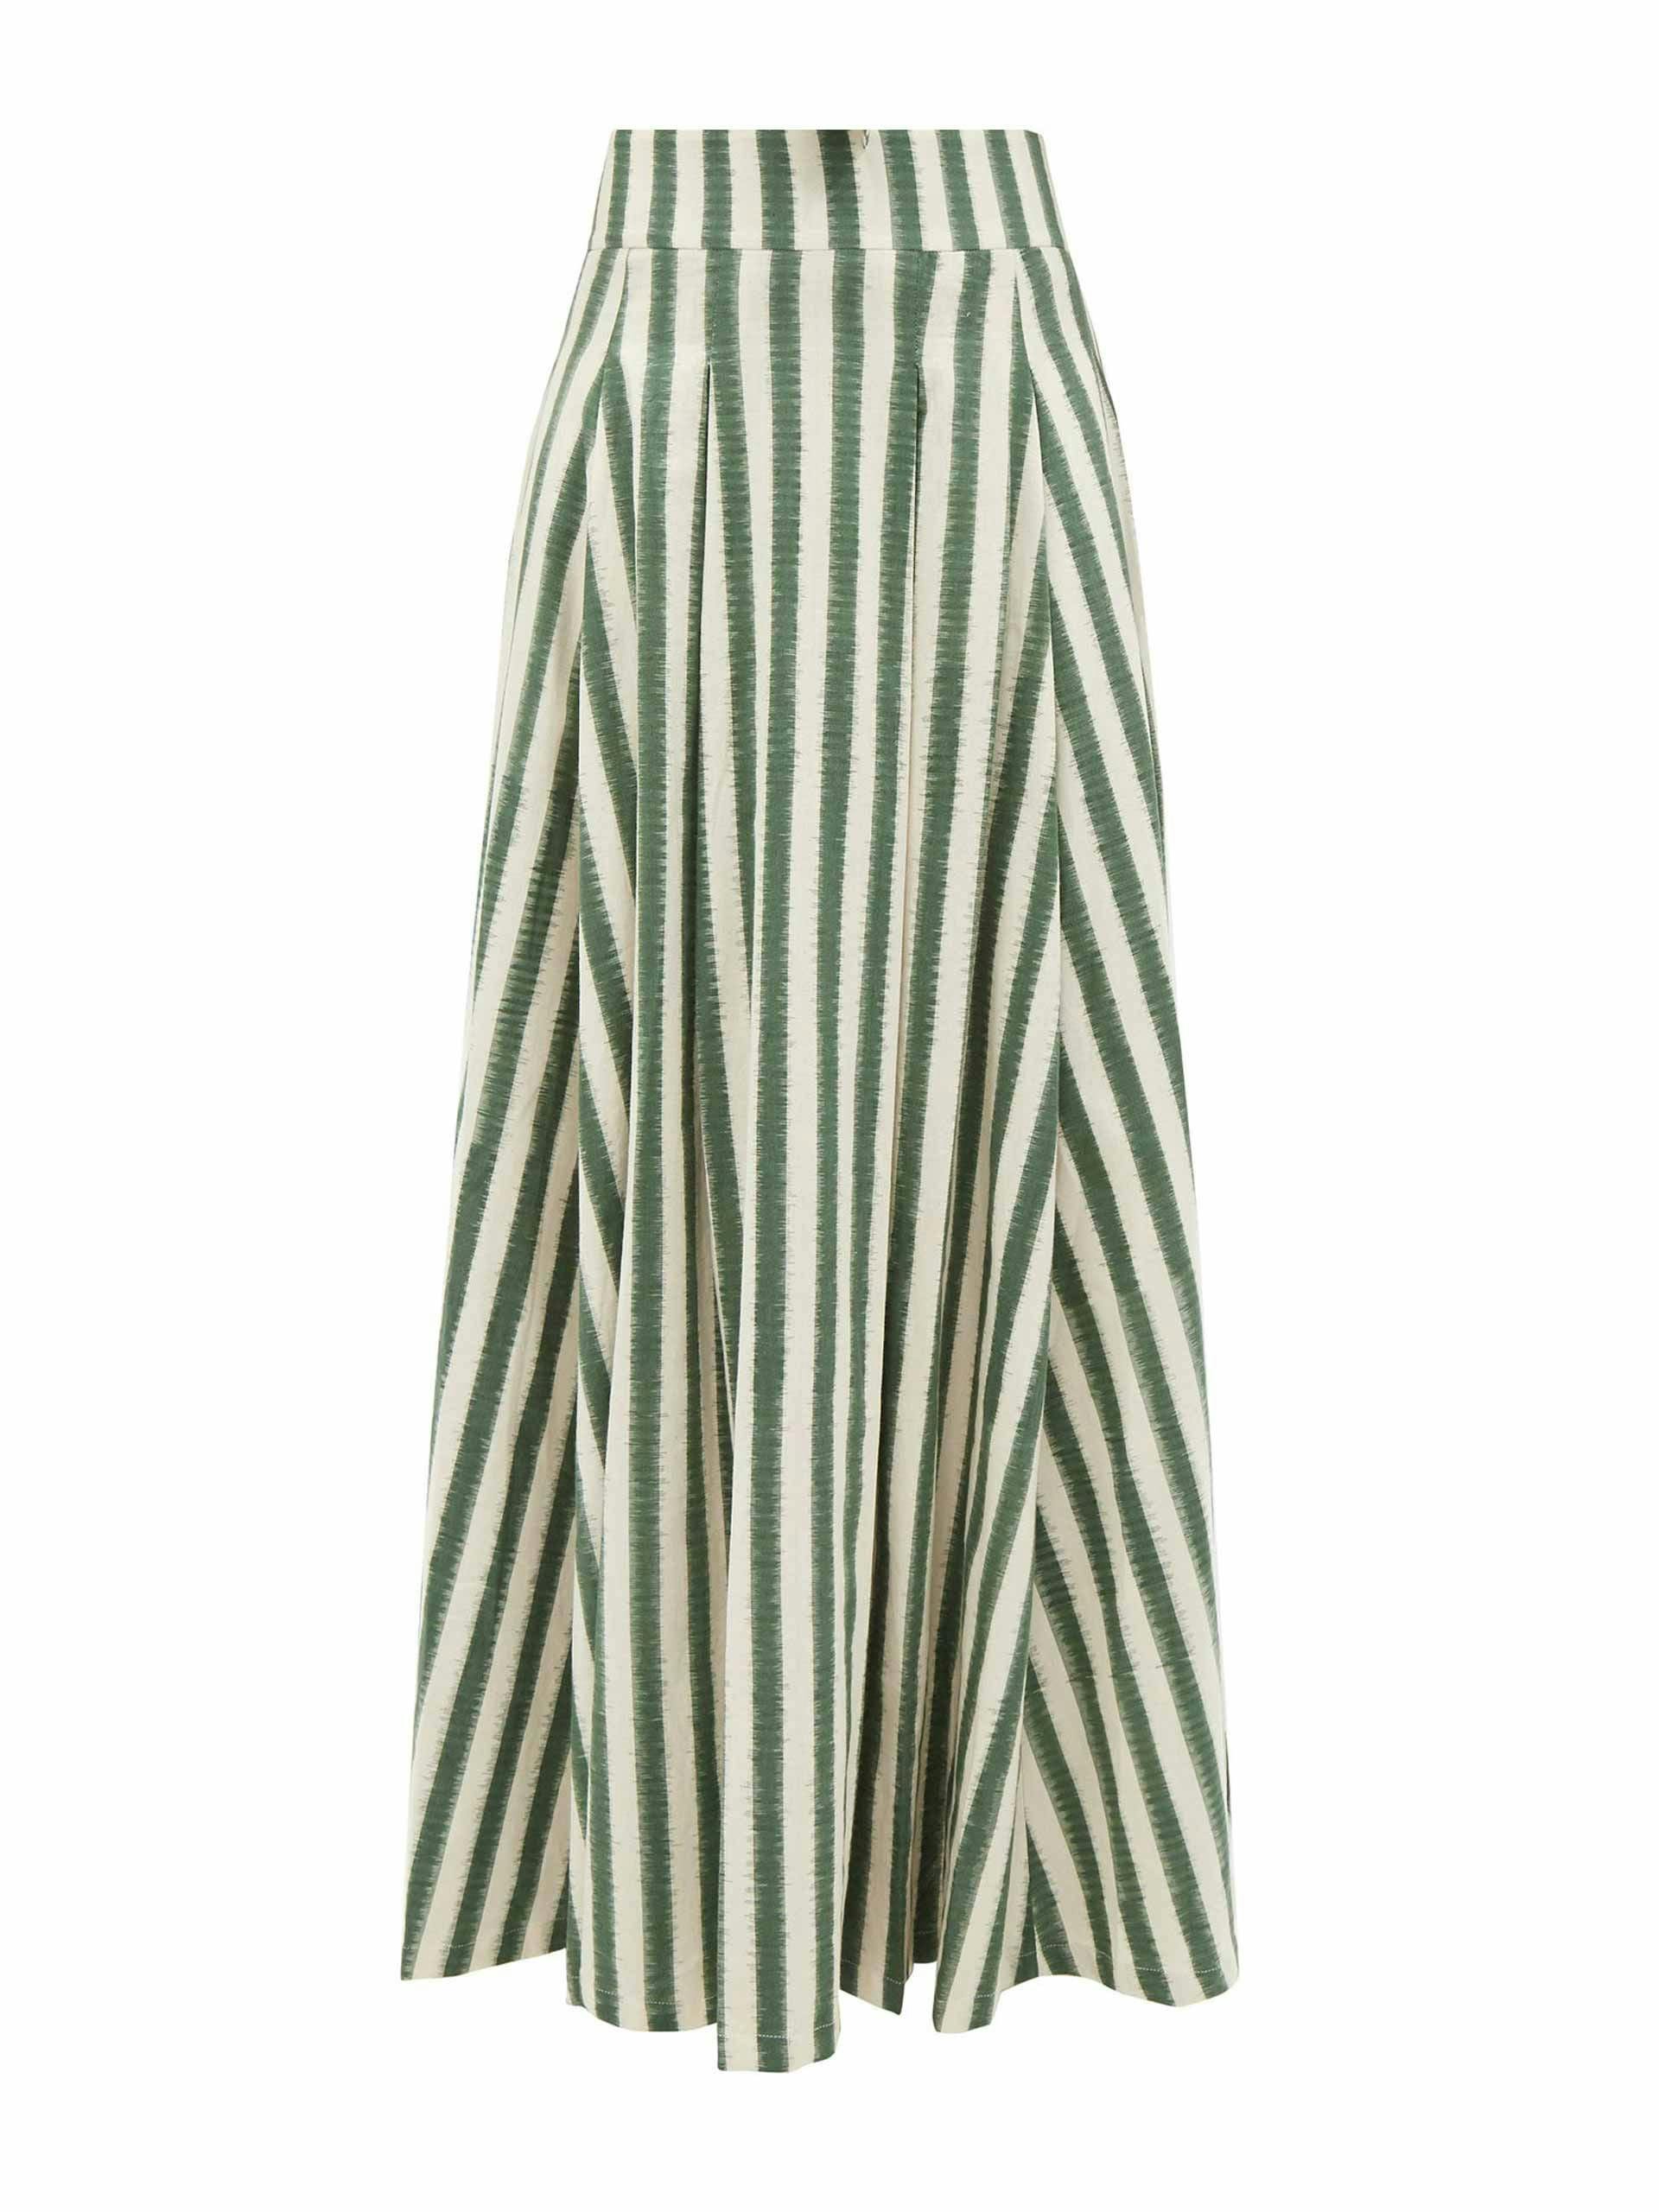 Ikat stripe print cotton maxi skirt